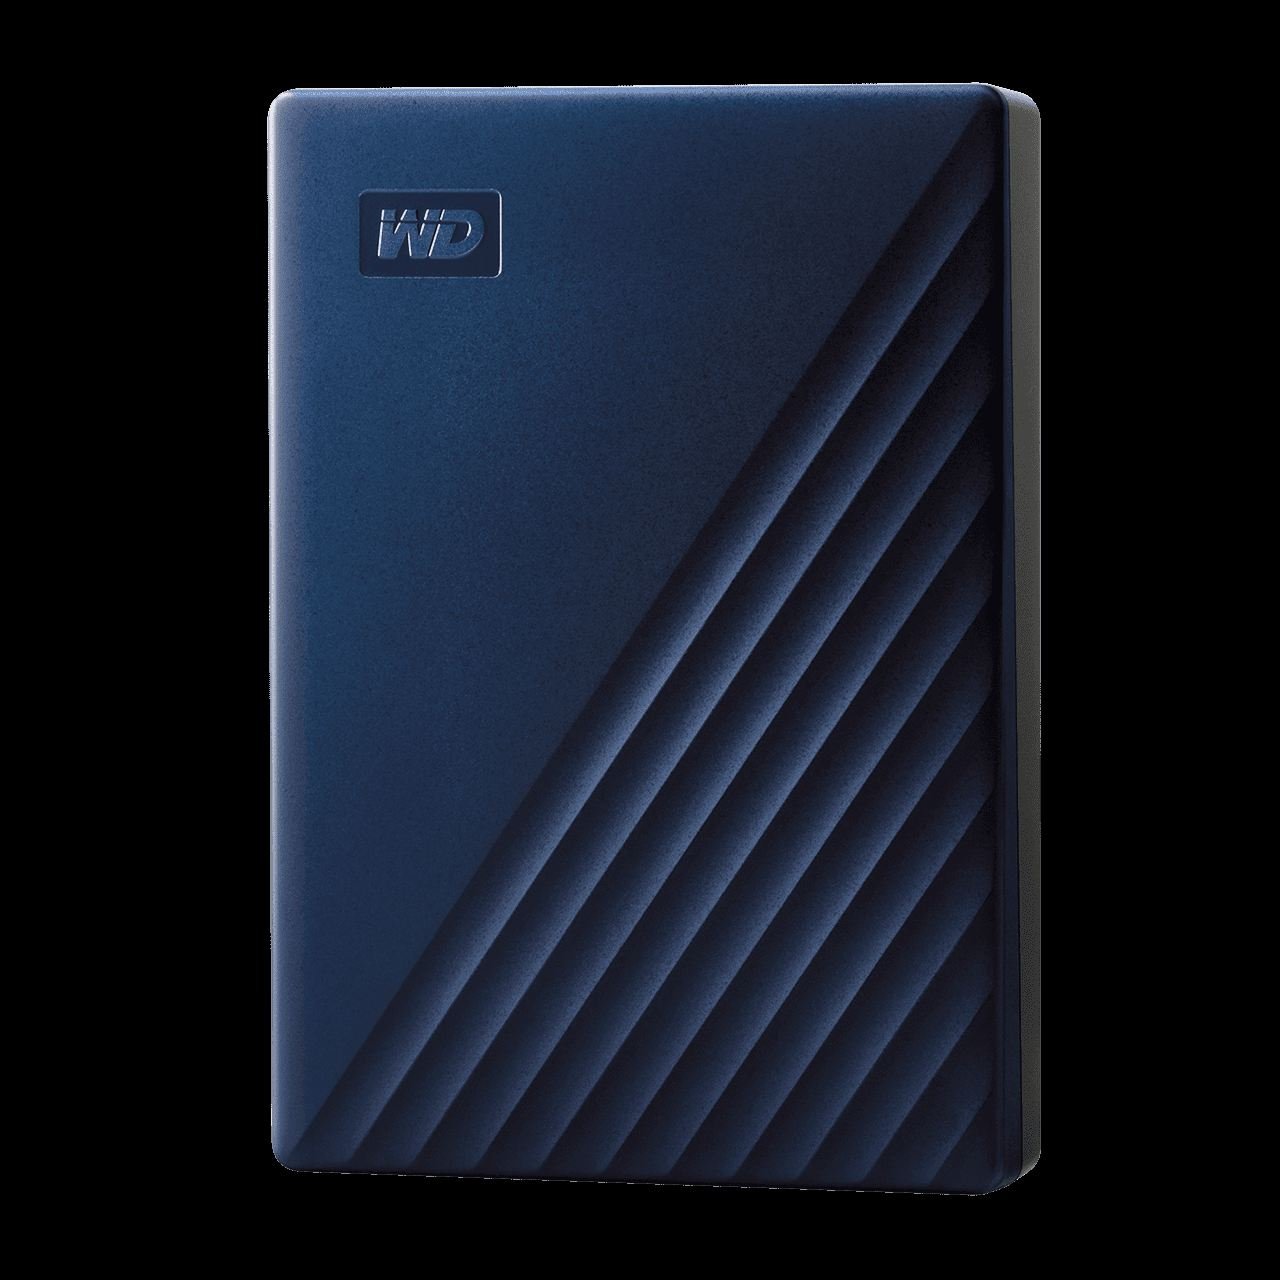 WDBA2F0050BBL-WESN 5TB USB 3.0 My Passport 2,5